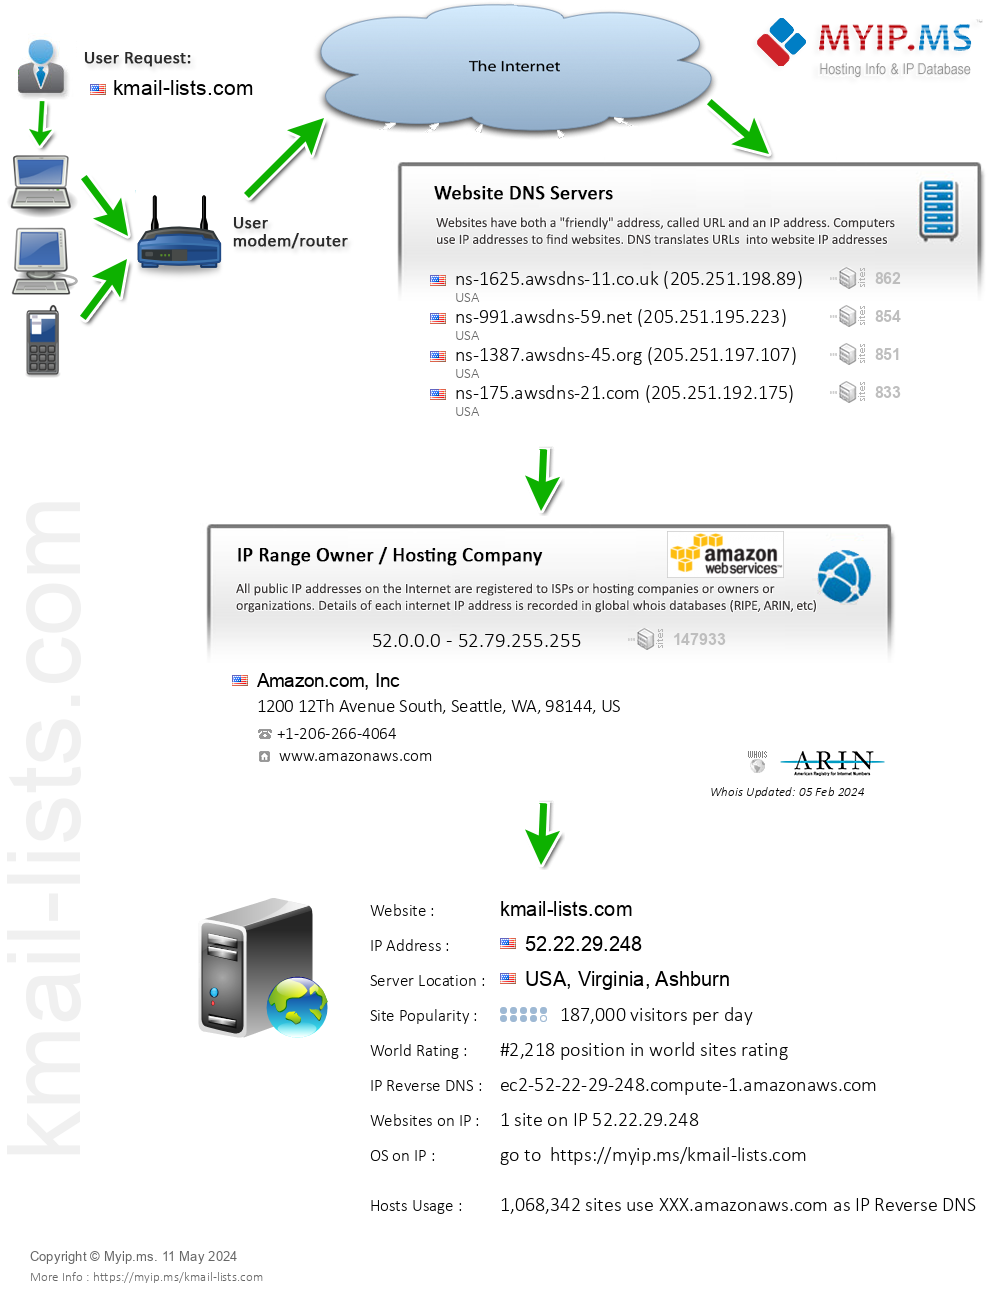 Kmail-lists.com - Website Hosting Visual IP Diagram